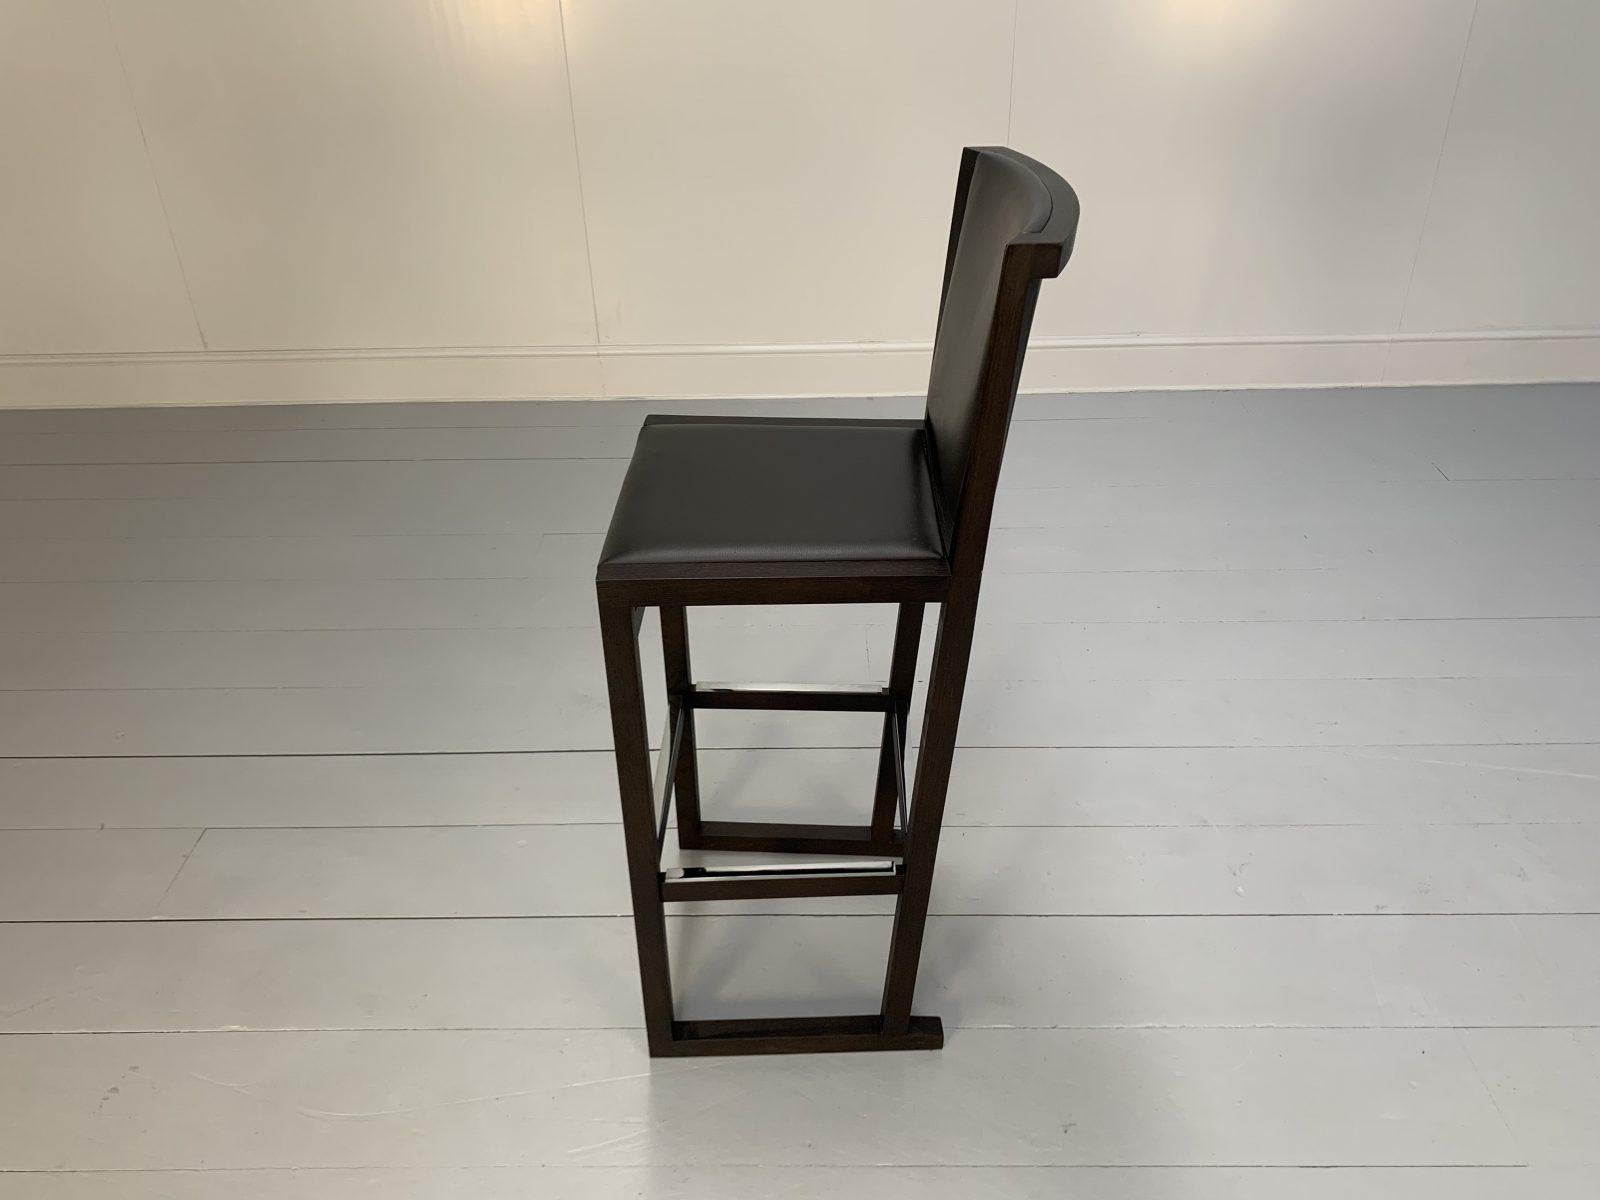 Pair of B&B Italia “Musa SM46G” Tall Bar Stool Chairs – In Dark Grey “Kasia” Lea For Sale 9